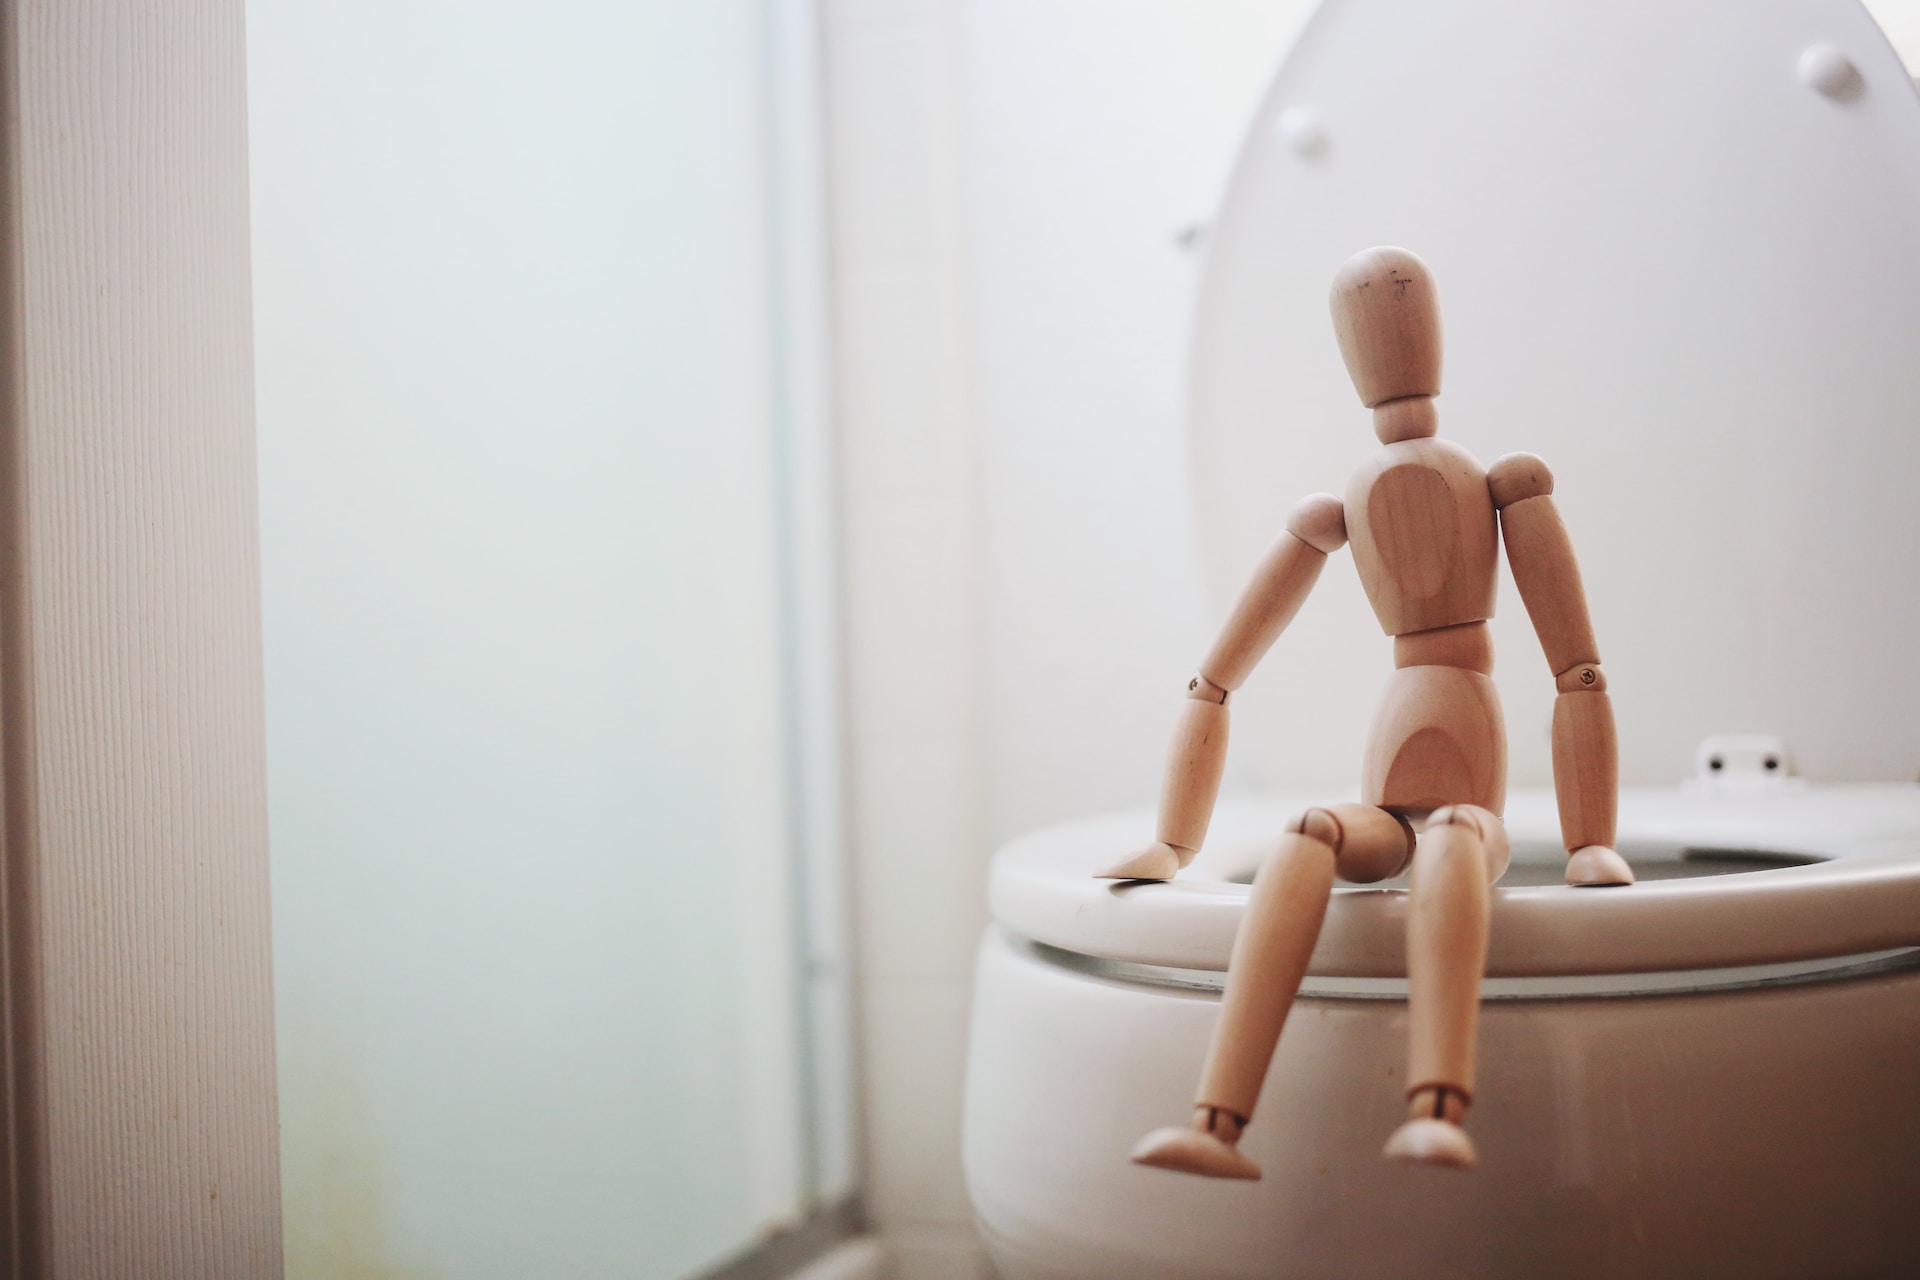 Small wooden figure sitting on edge of toilet.